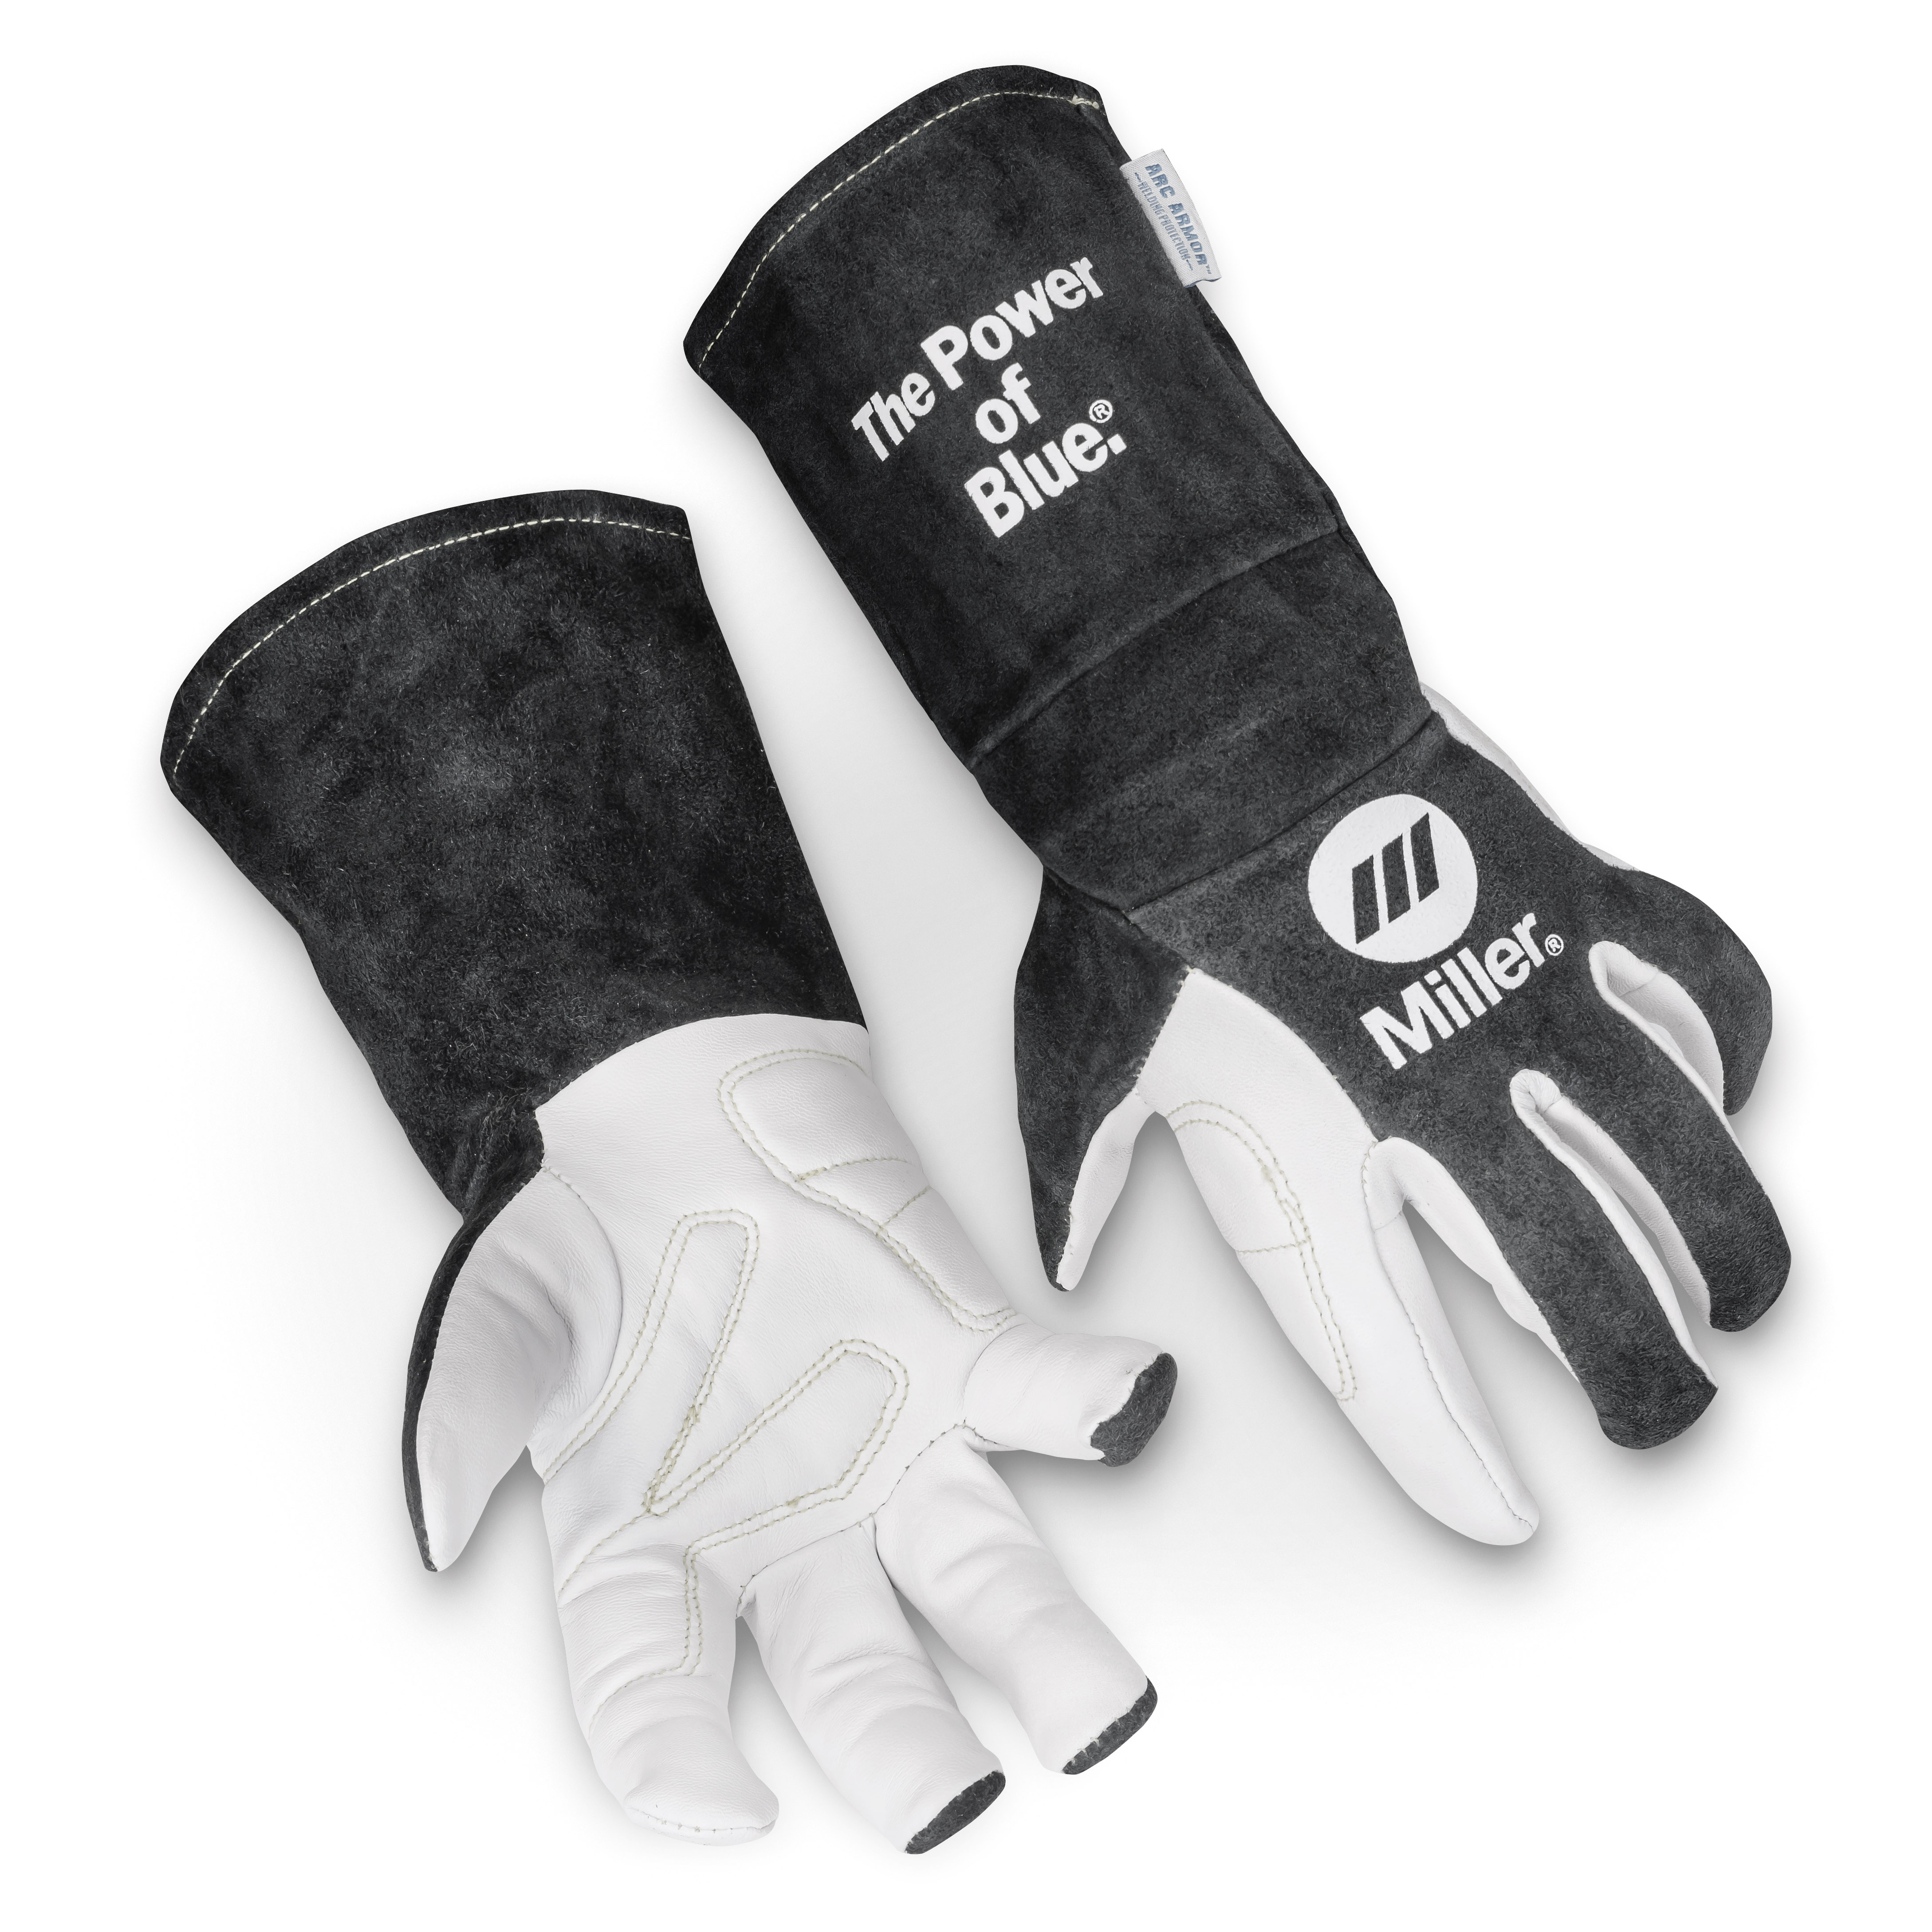 Miller 263349 Arc Armor TIG Welding Glove X-large for sale online 